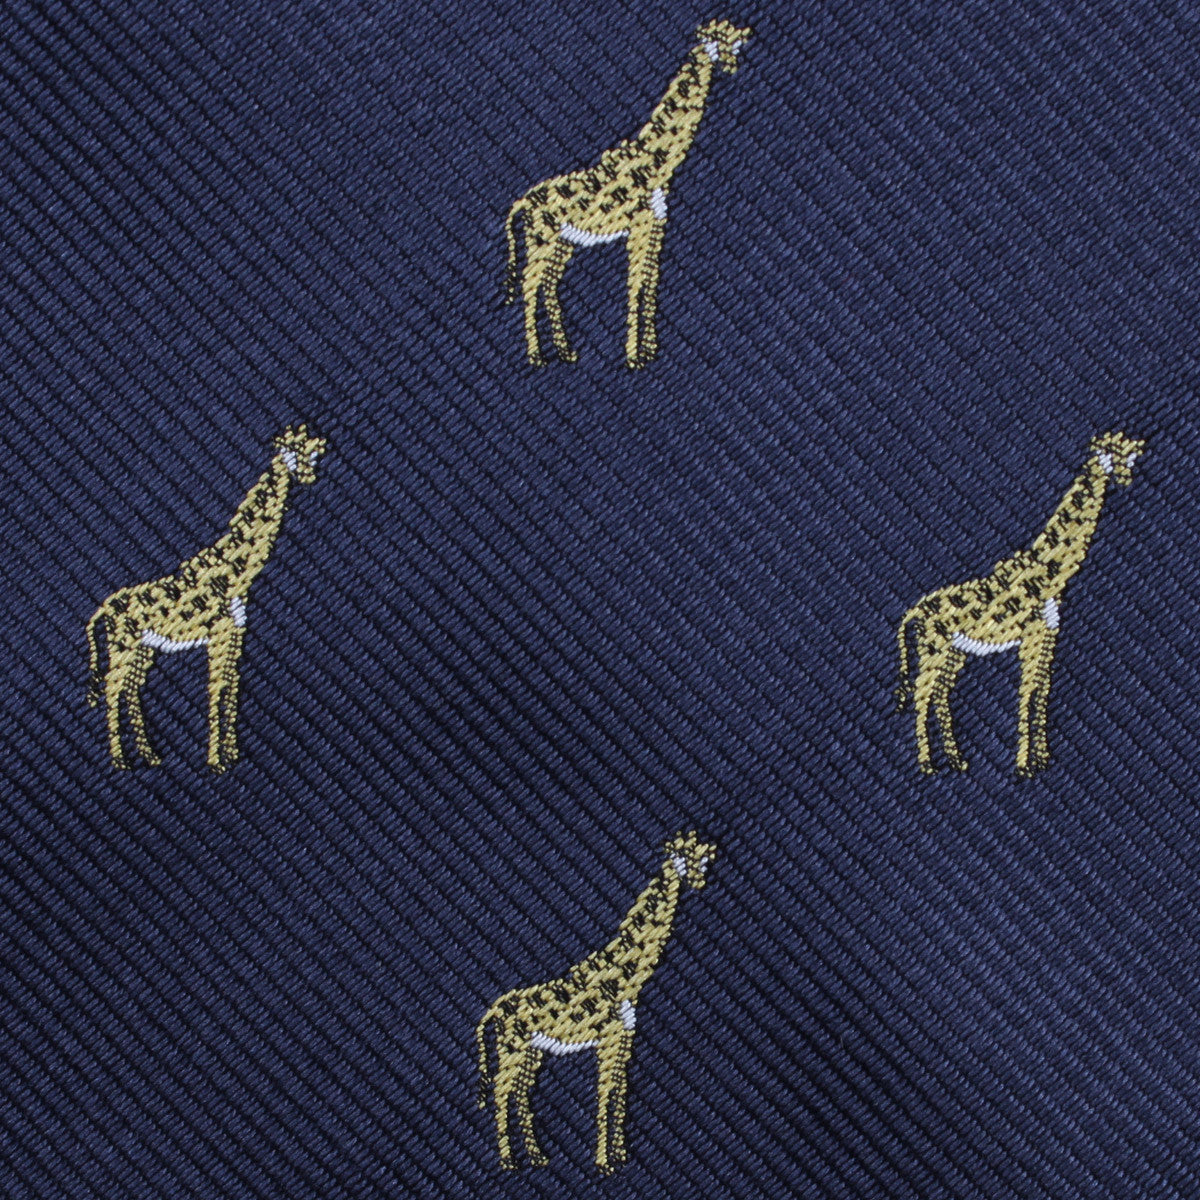 Giraffe Fabric Skinny Tie